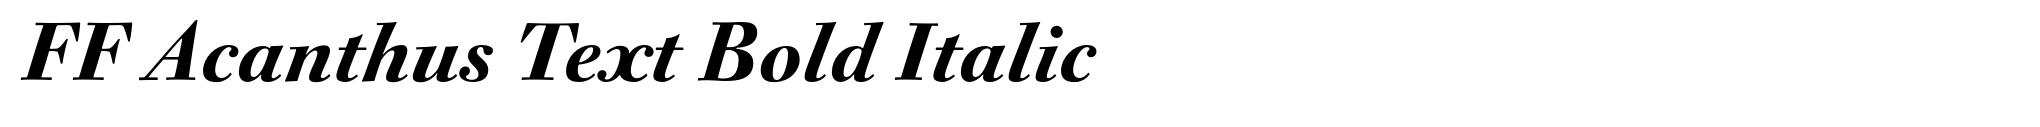 FF Acanthus Text Bold Italic image